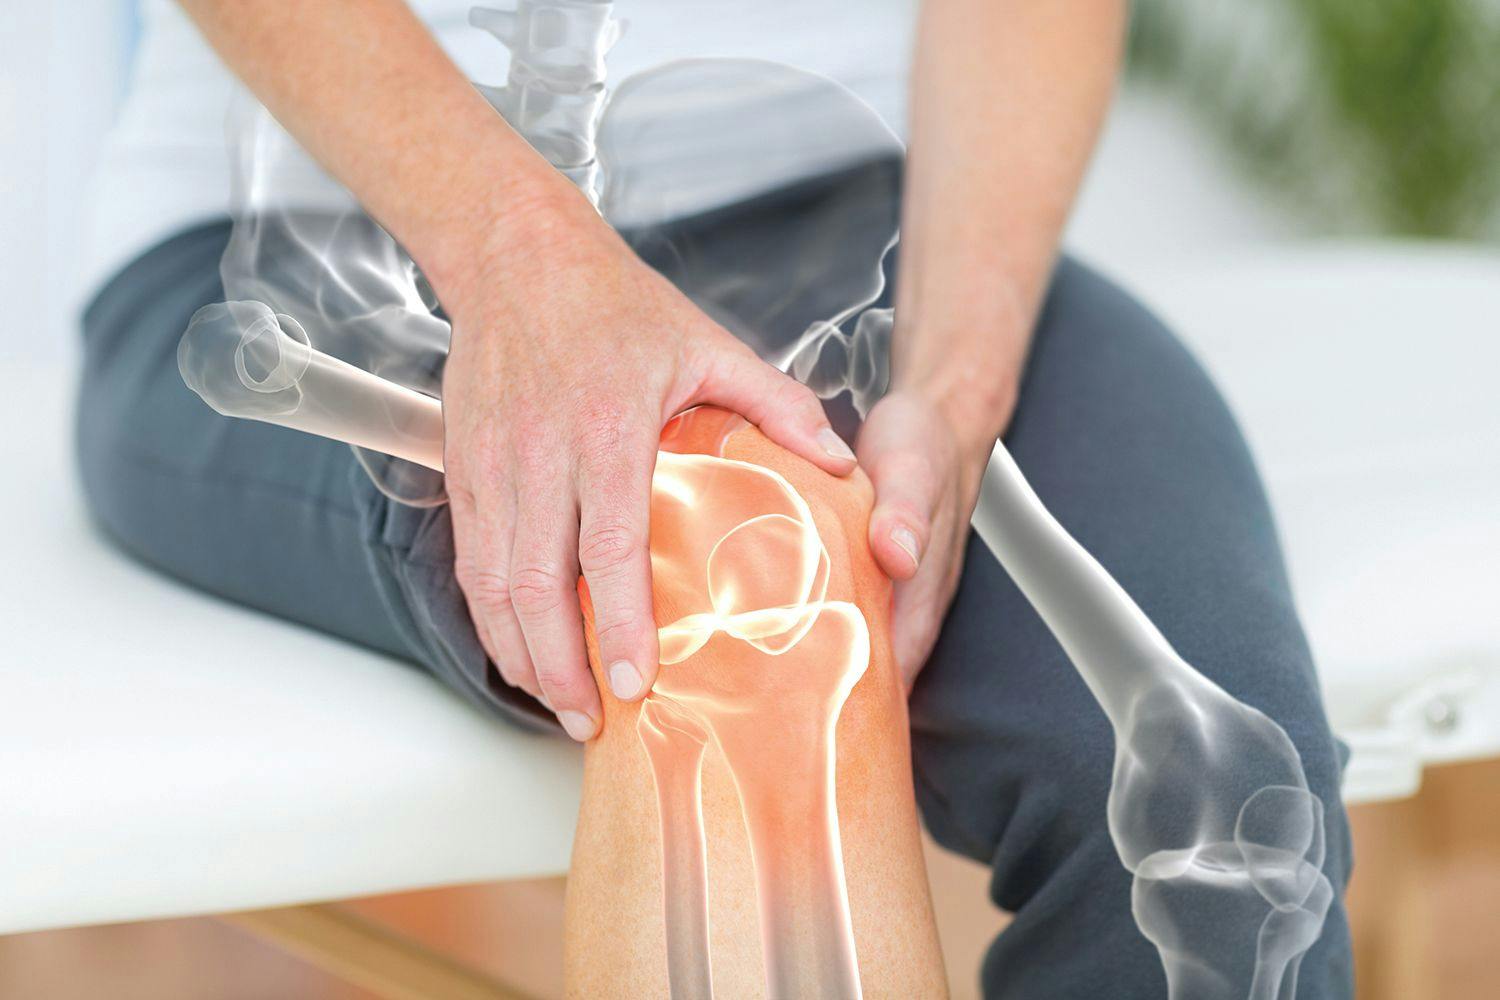 Trending News Today: Biologics Associated with Better Bone Density, Function in Psoriatic Arthritis